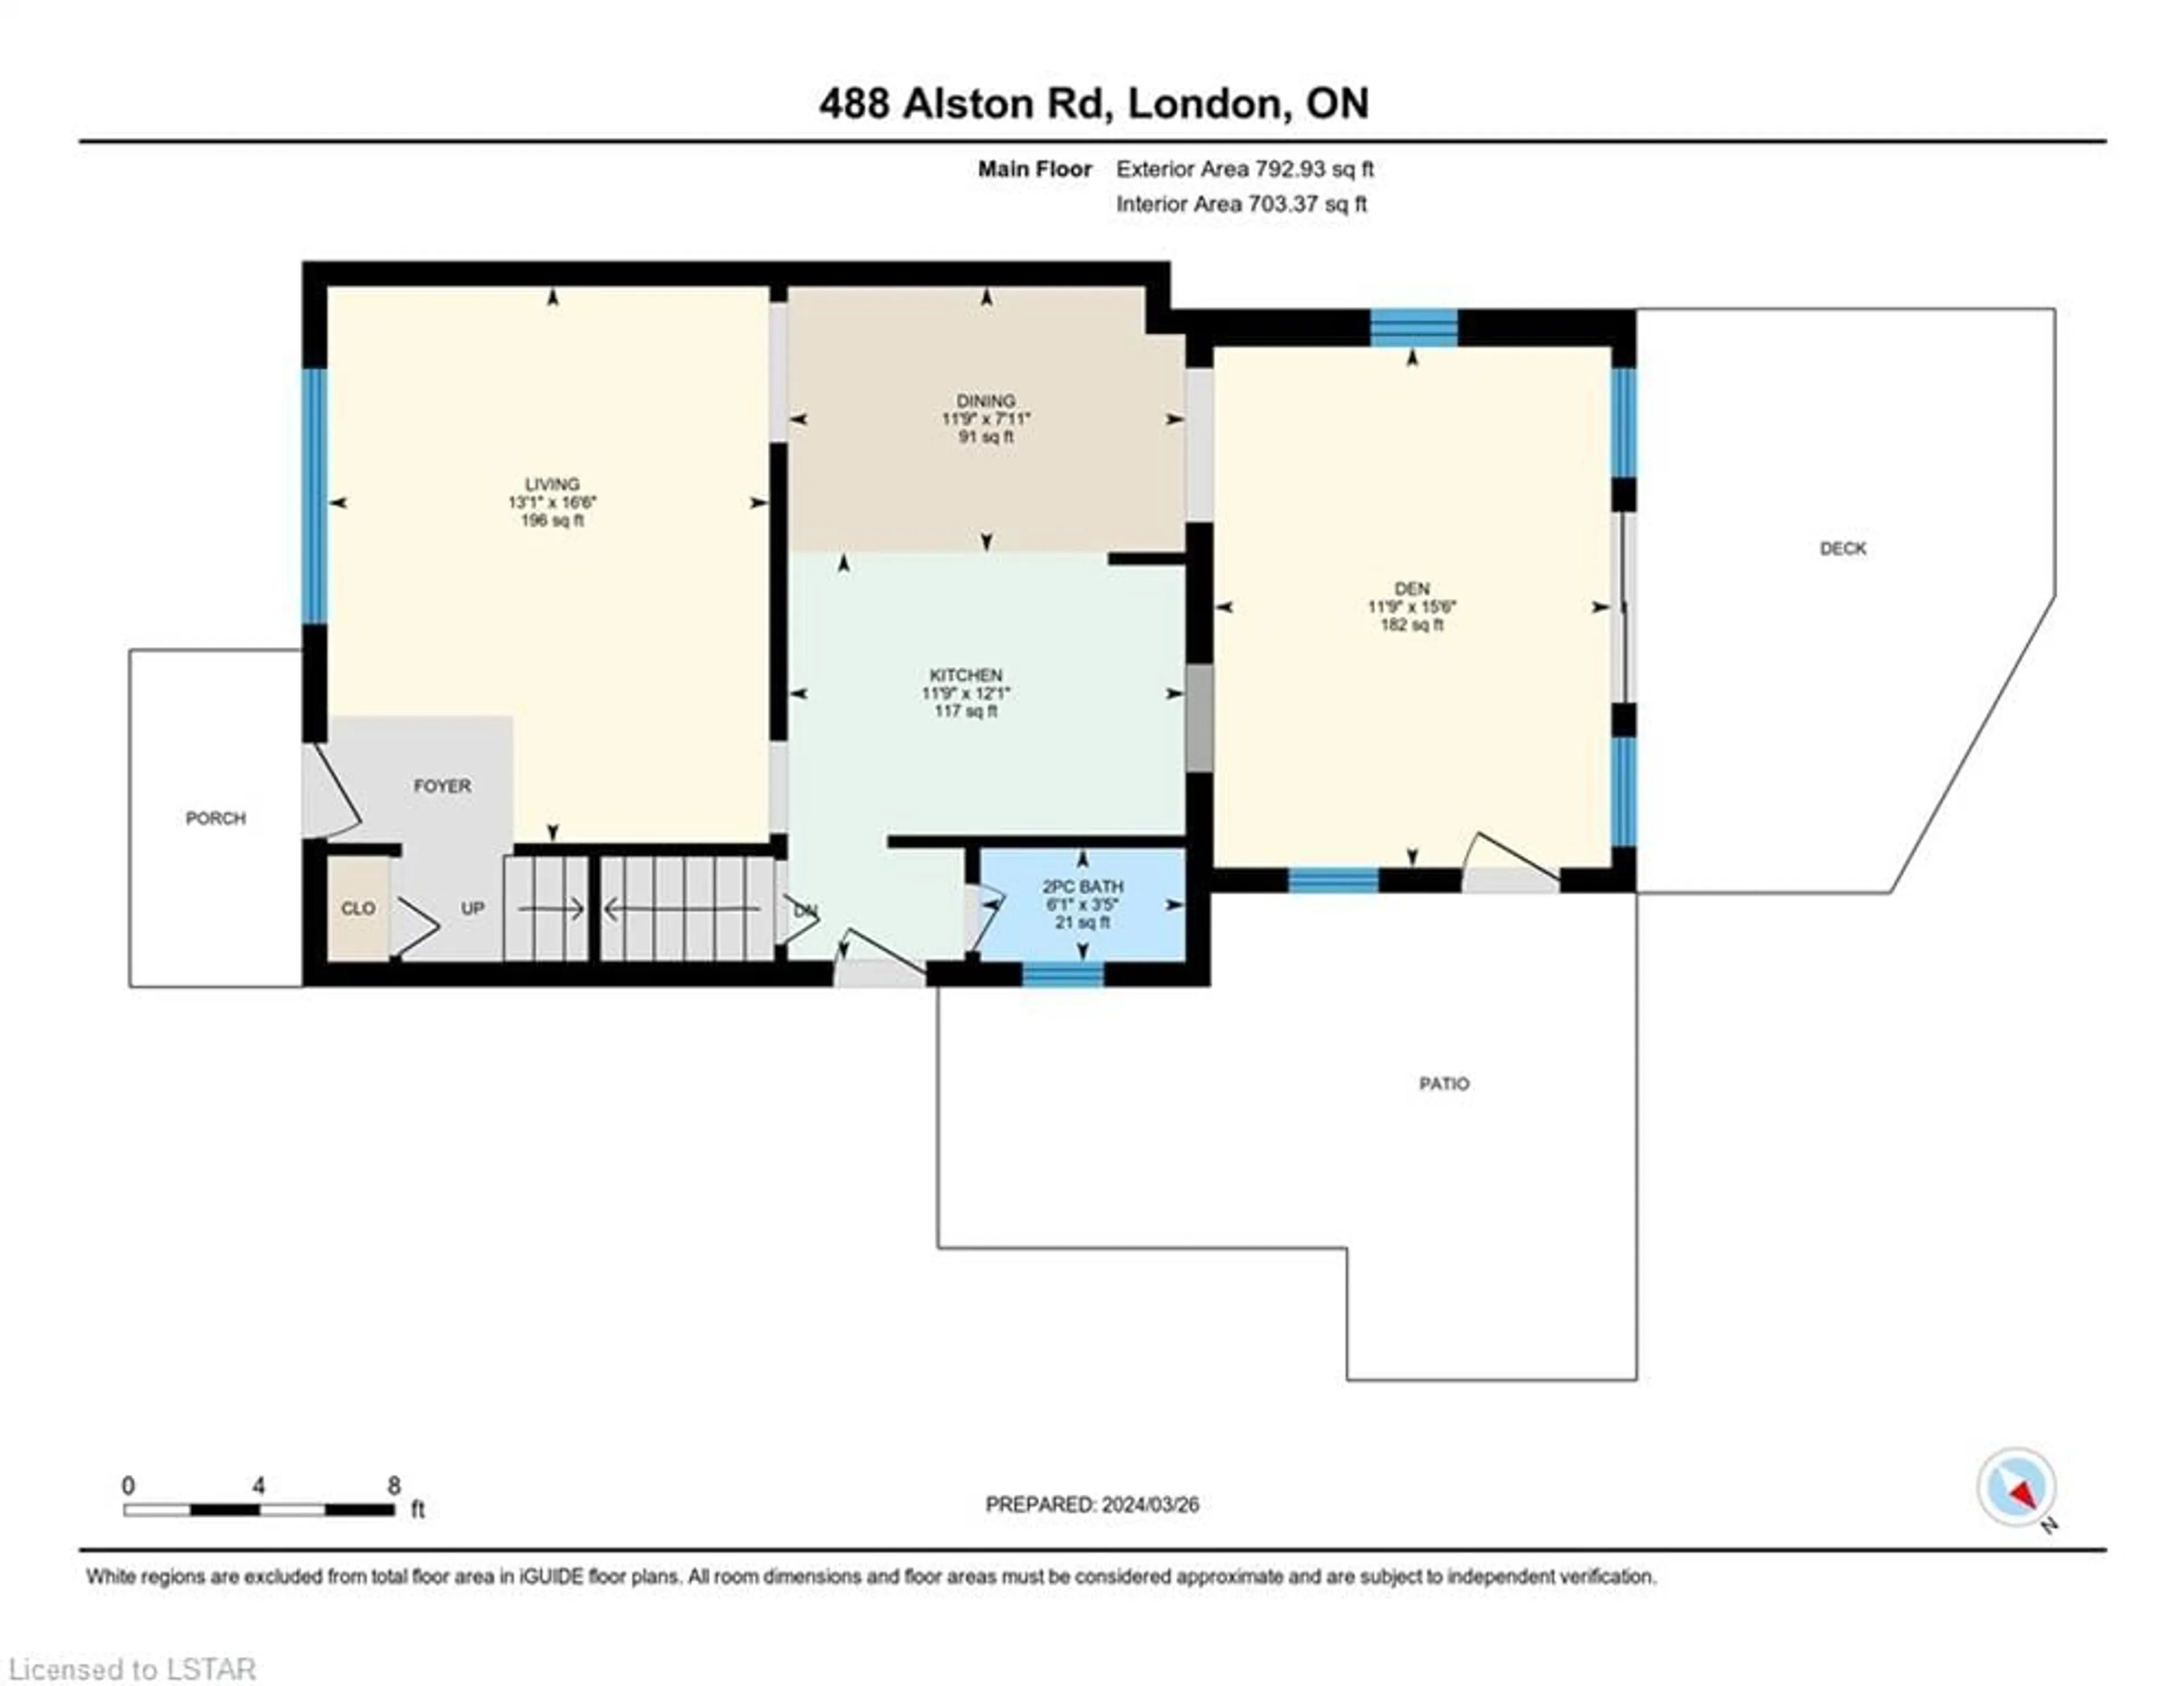 Floor plan for 488 Alston Rd, London Ontario N6C 3B9